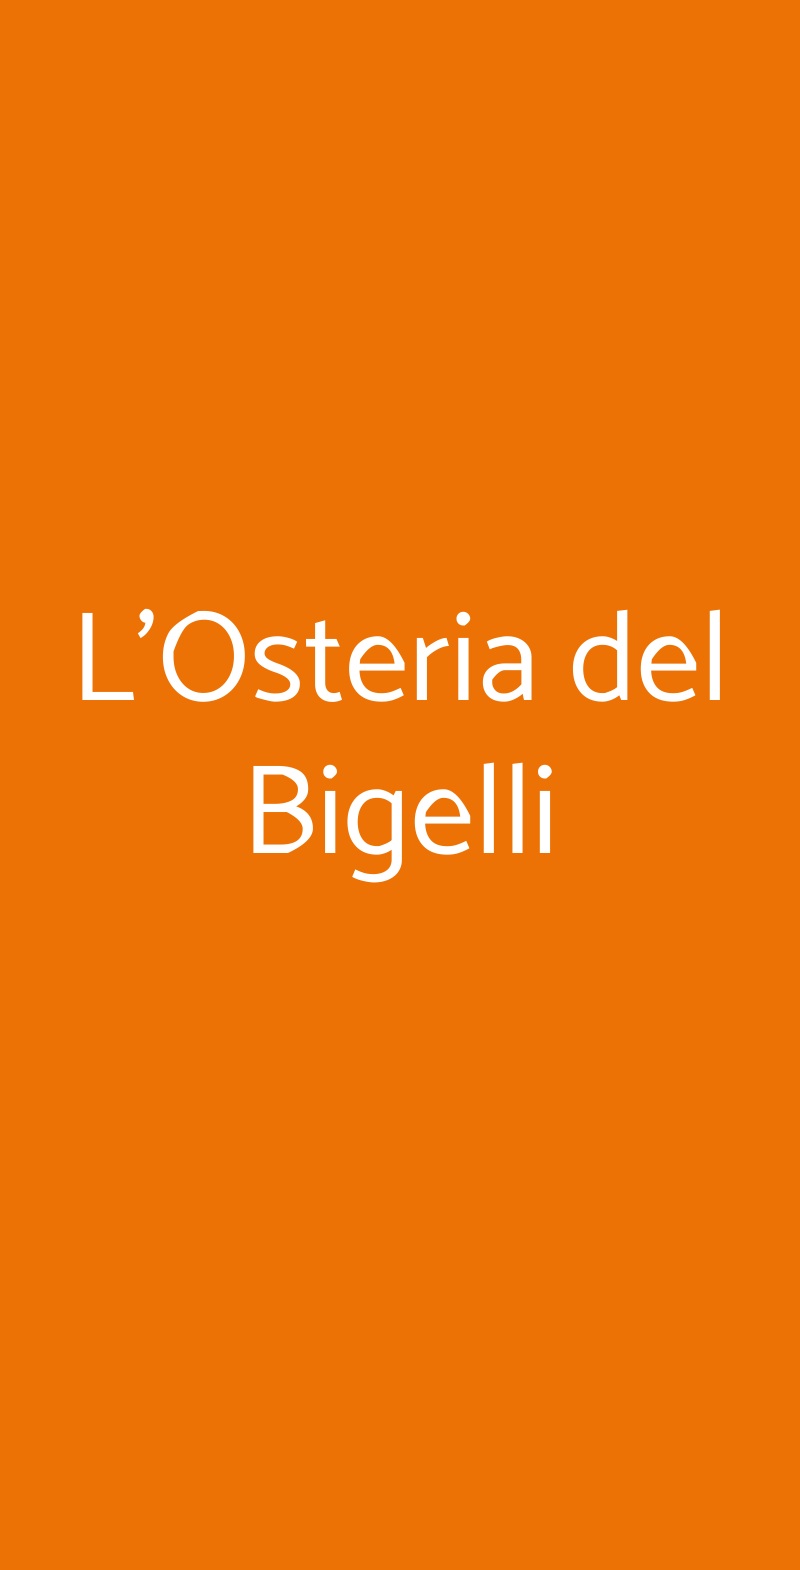 L'Osteria del Bigelli Siena menù 1 pagina